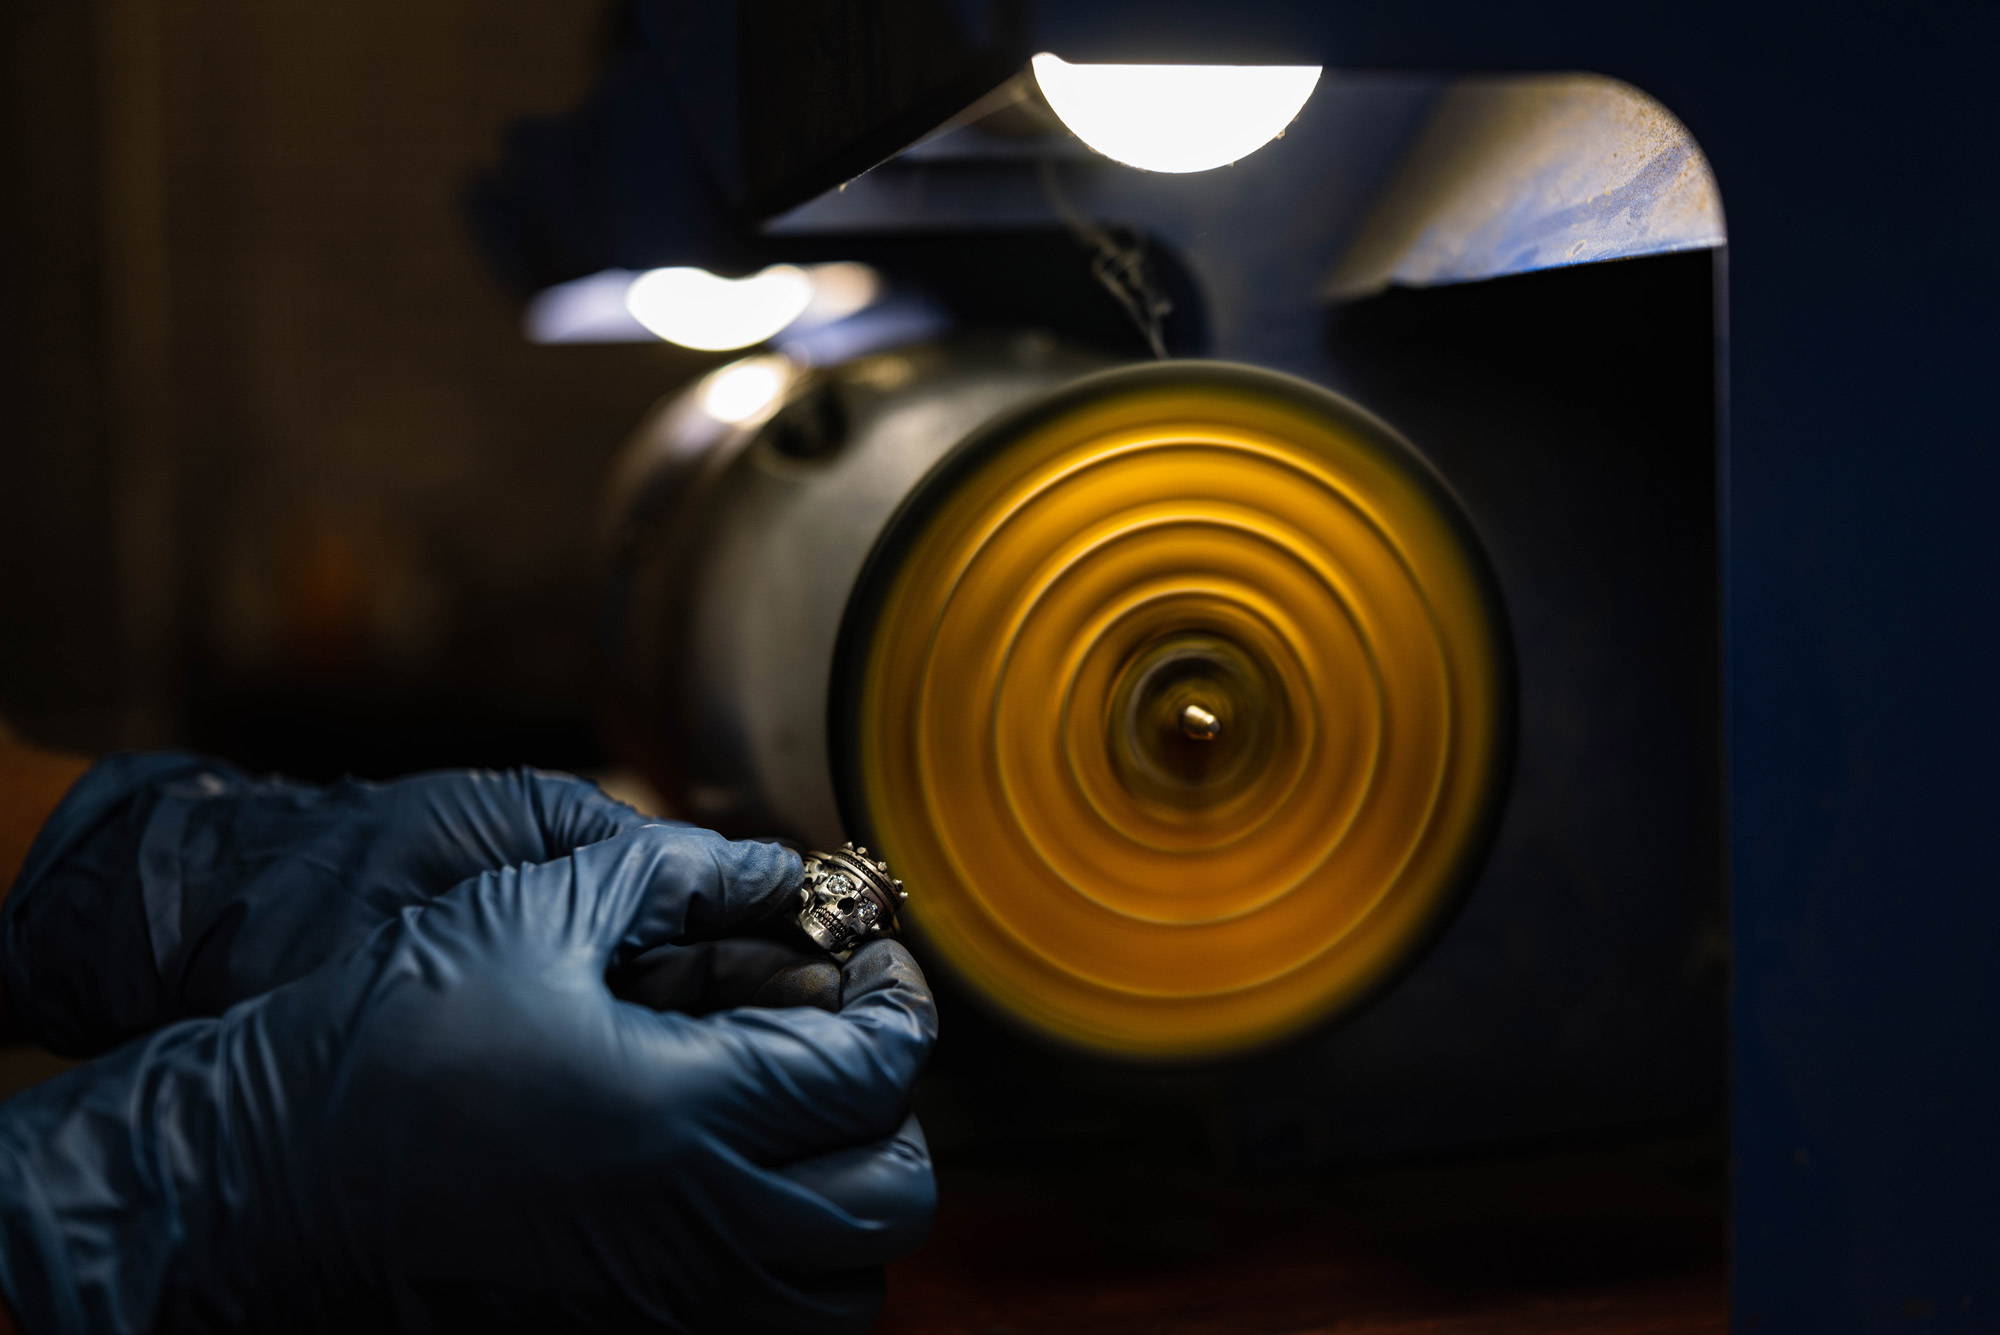 A NightRider Master Jeweler polishing a Guardian ring